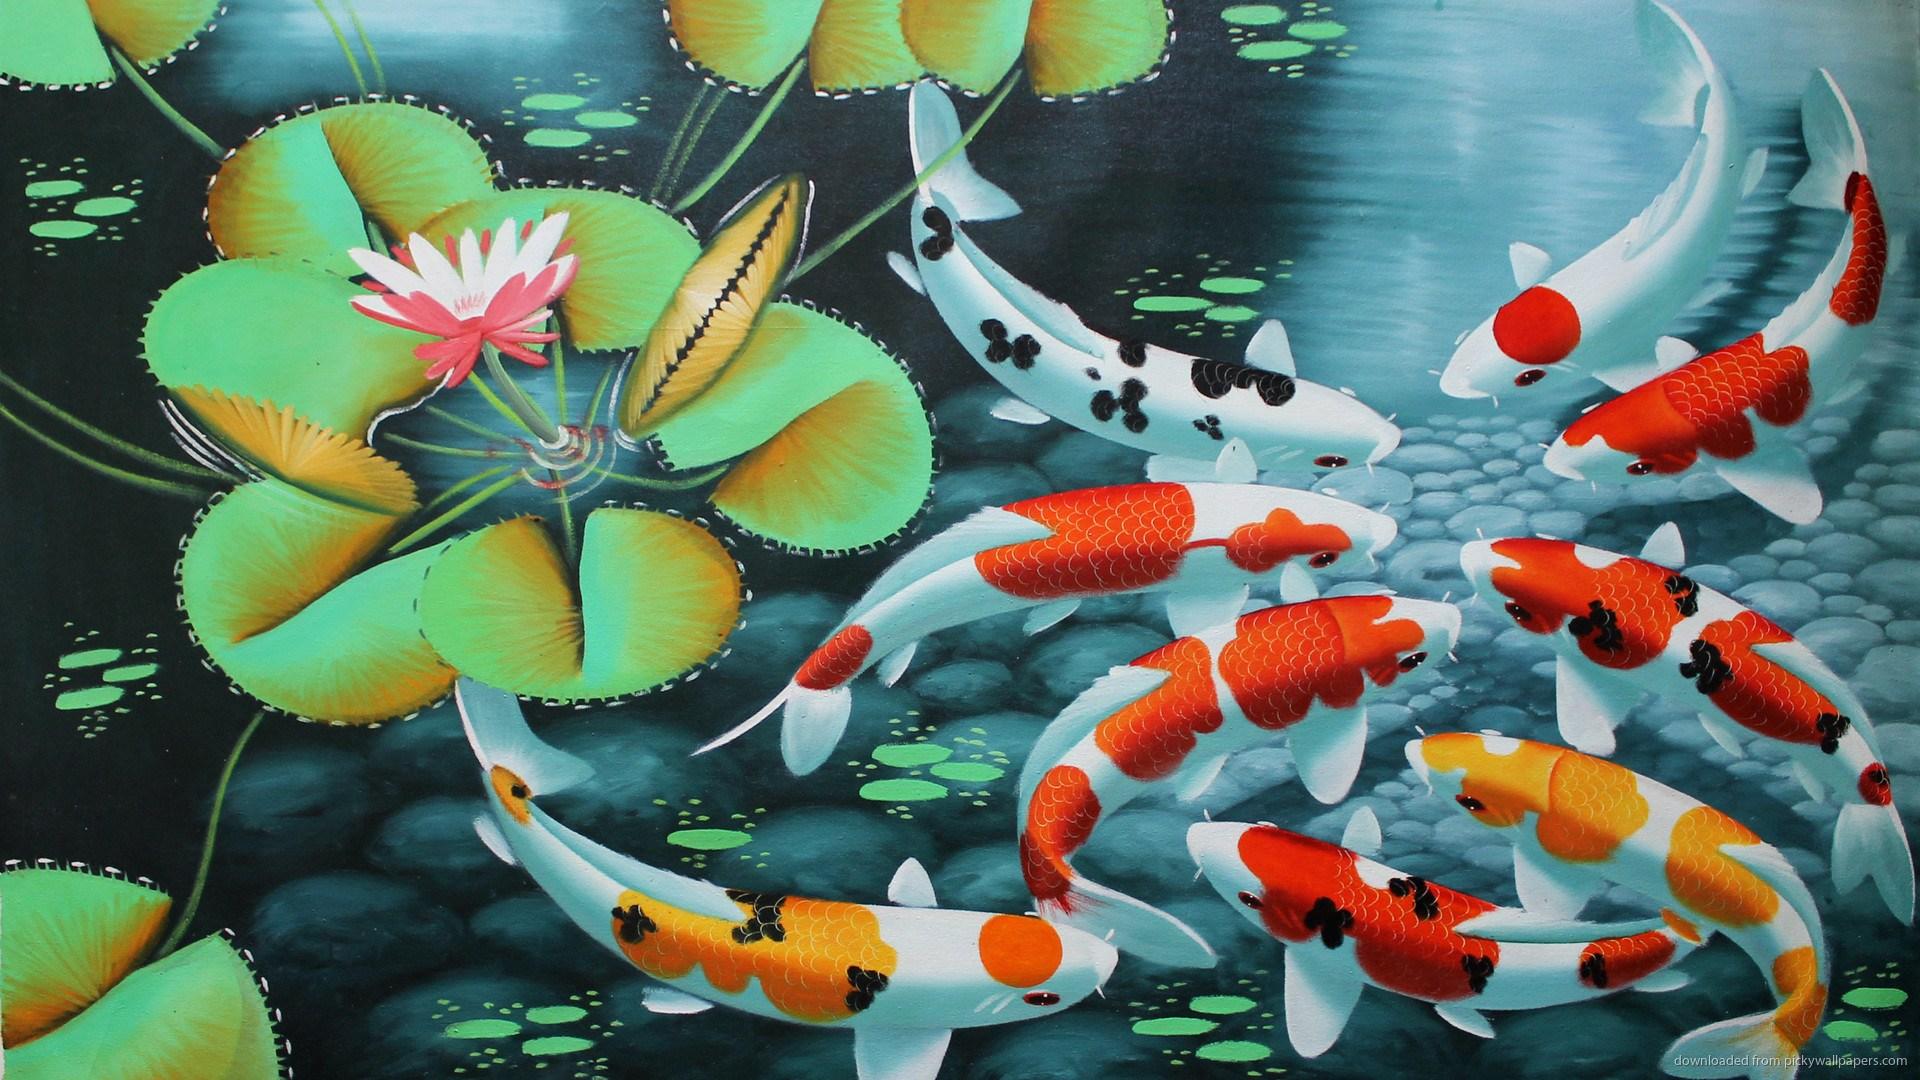 Koi Fish Live Wallpaper Full Version Free Download - Koi Fish Wallpaper